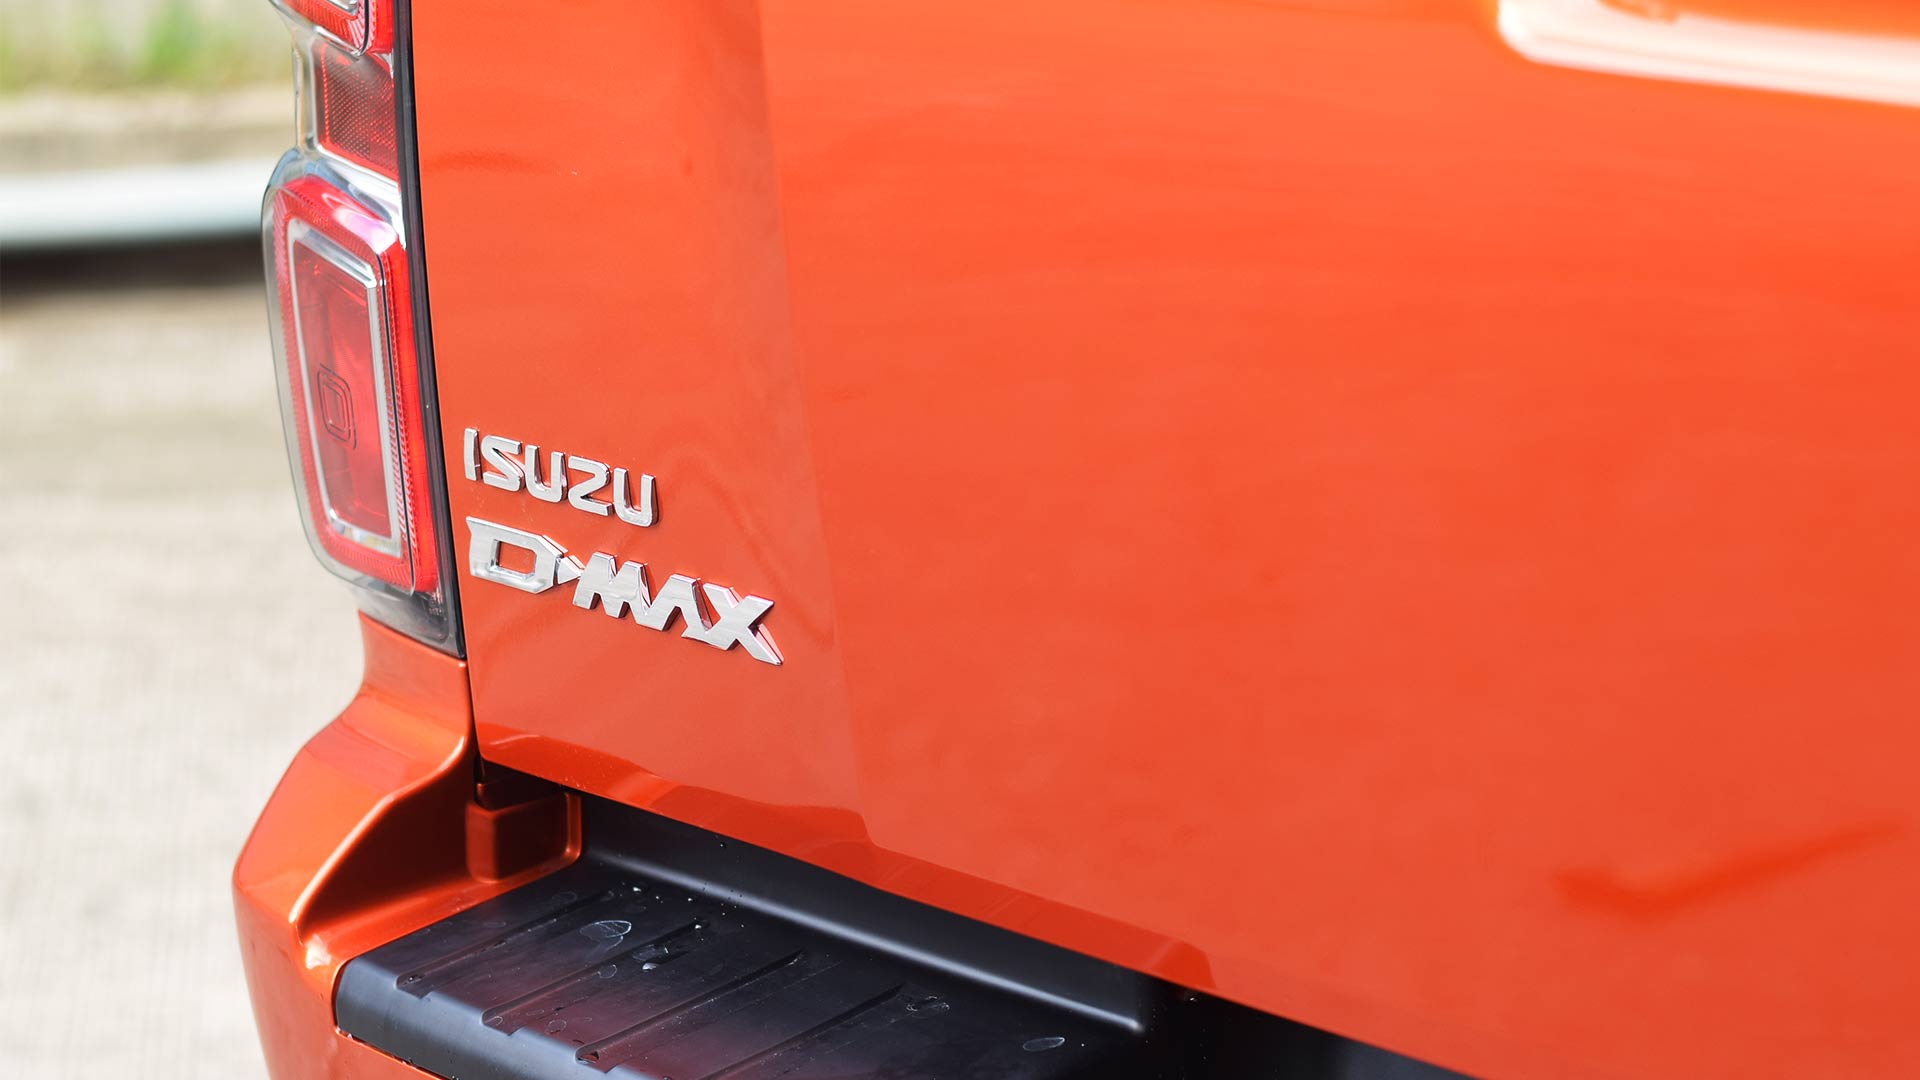 The 2021 Isuzu D-Max rear emblem